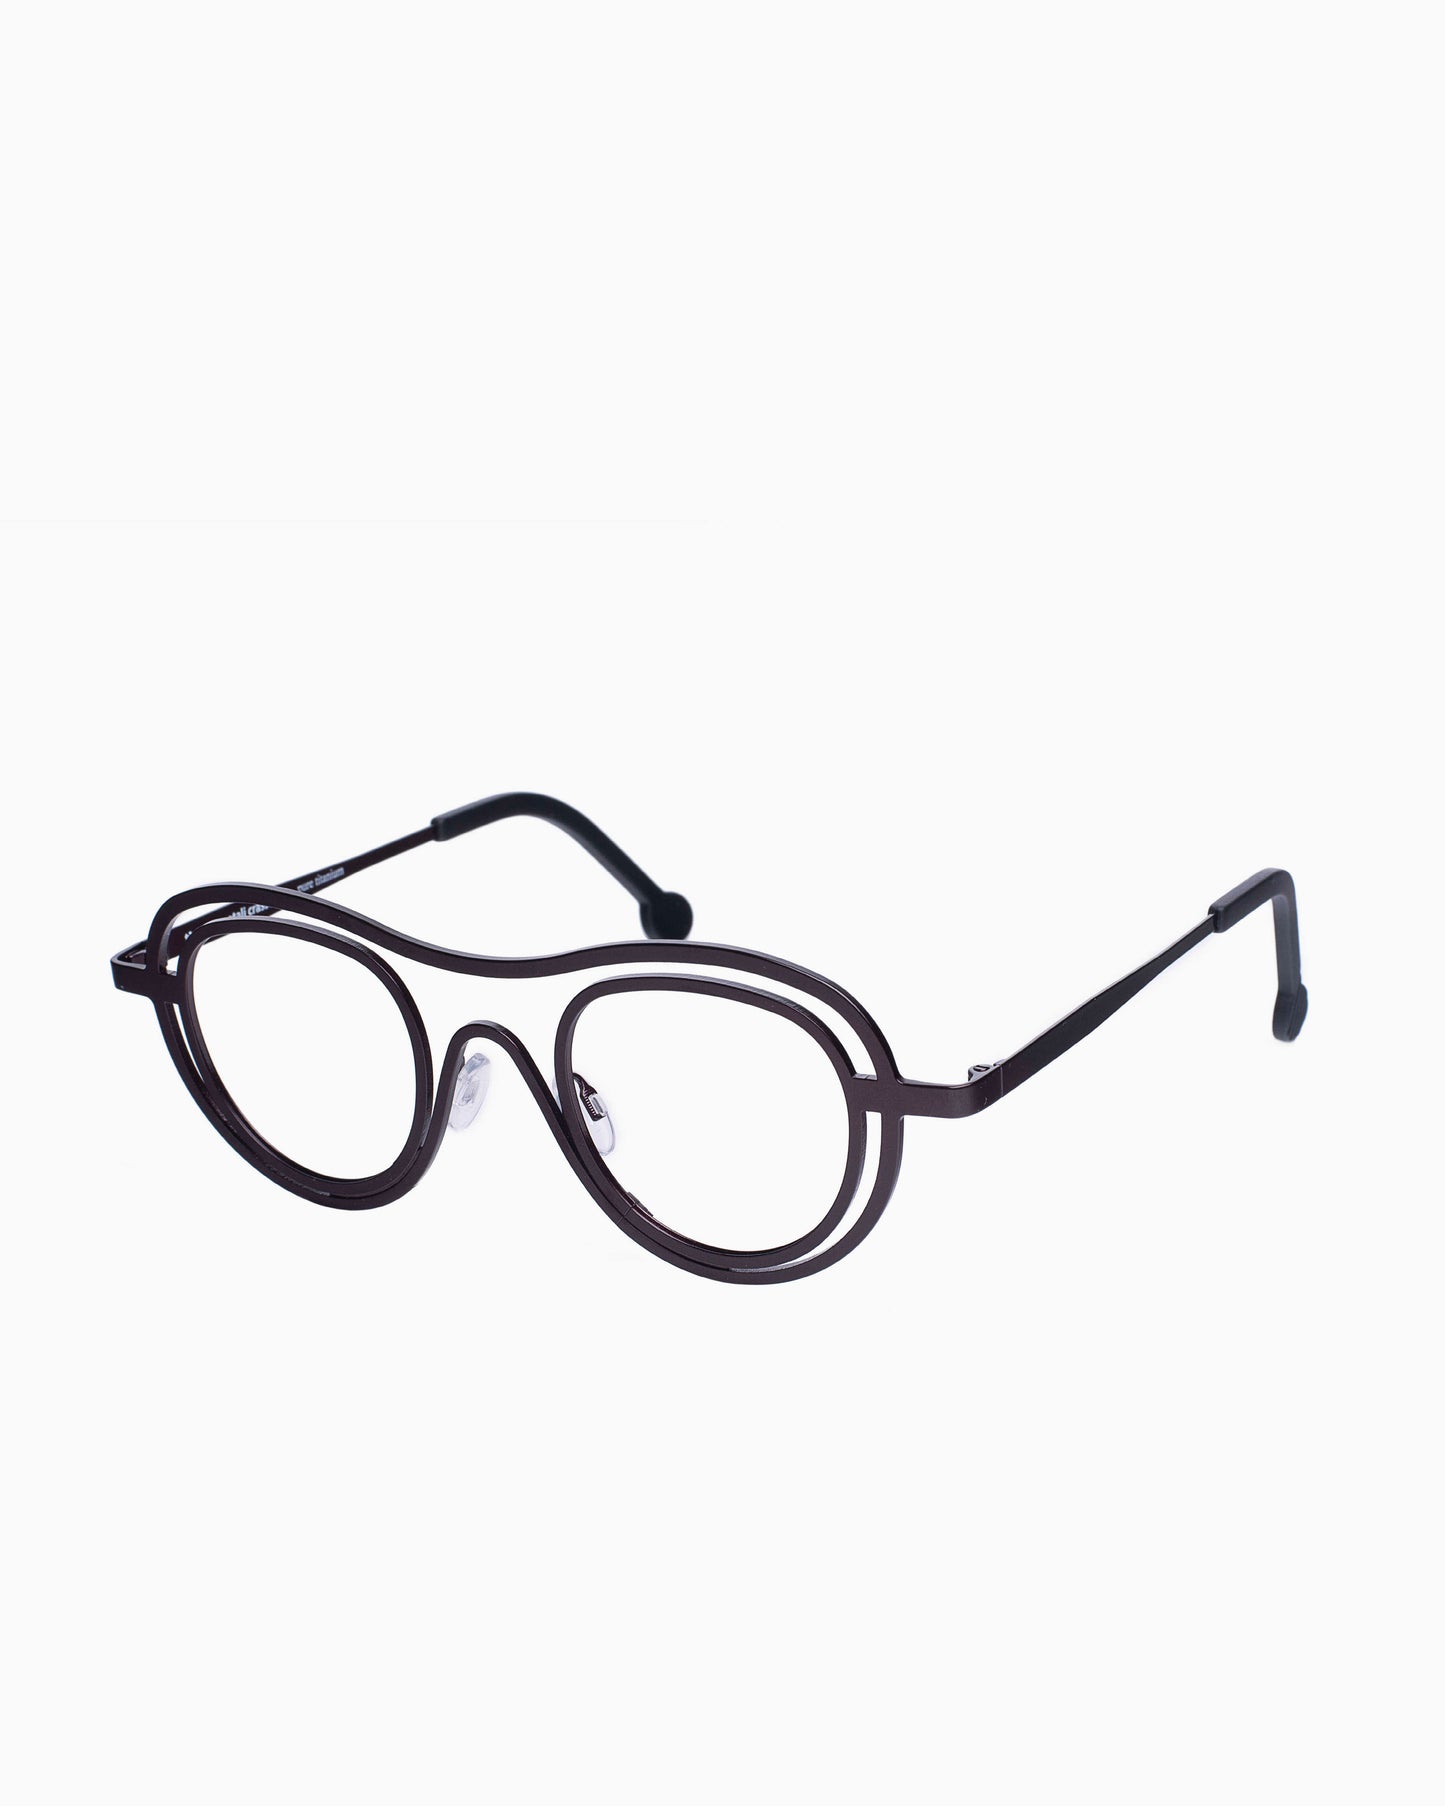 Theo - Chat - 63 | glasses bar